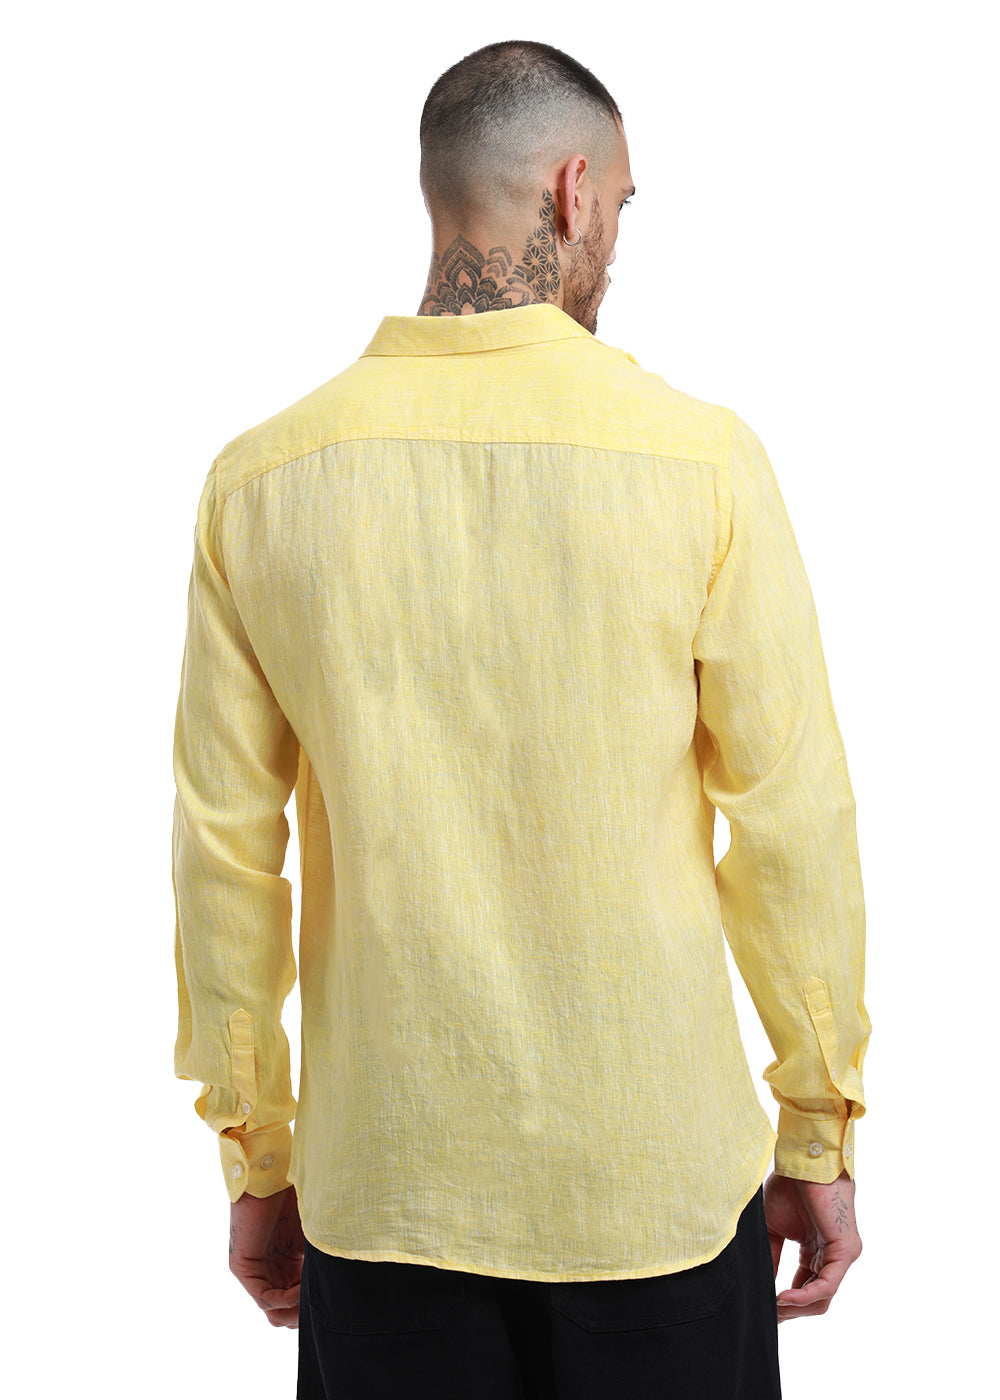 Back pastel yellow linen shirt